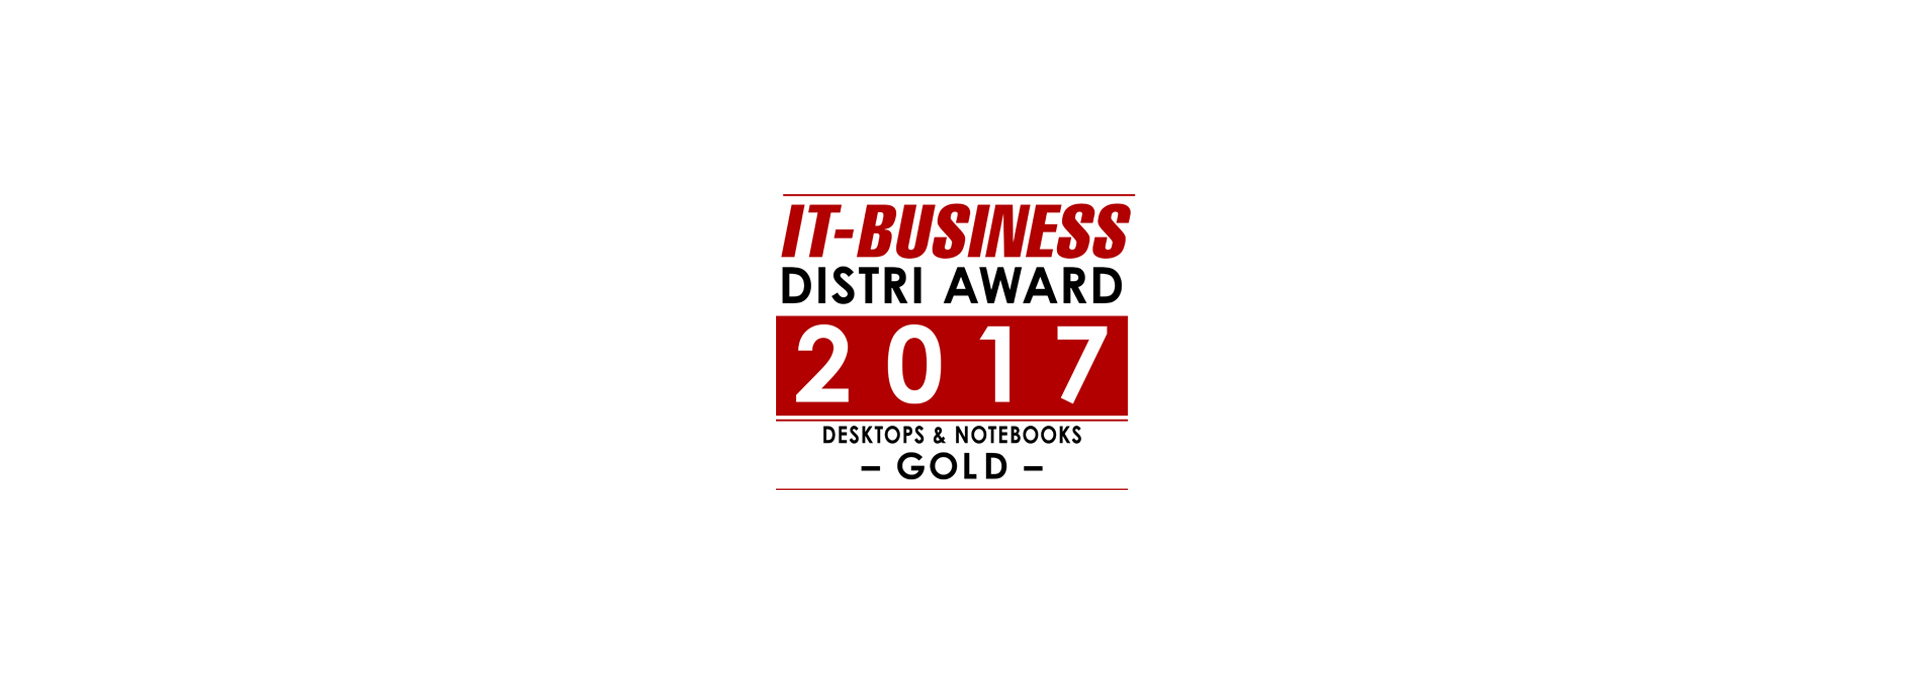 Distri Award 2017